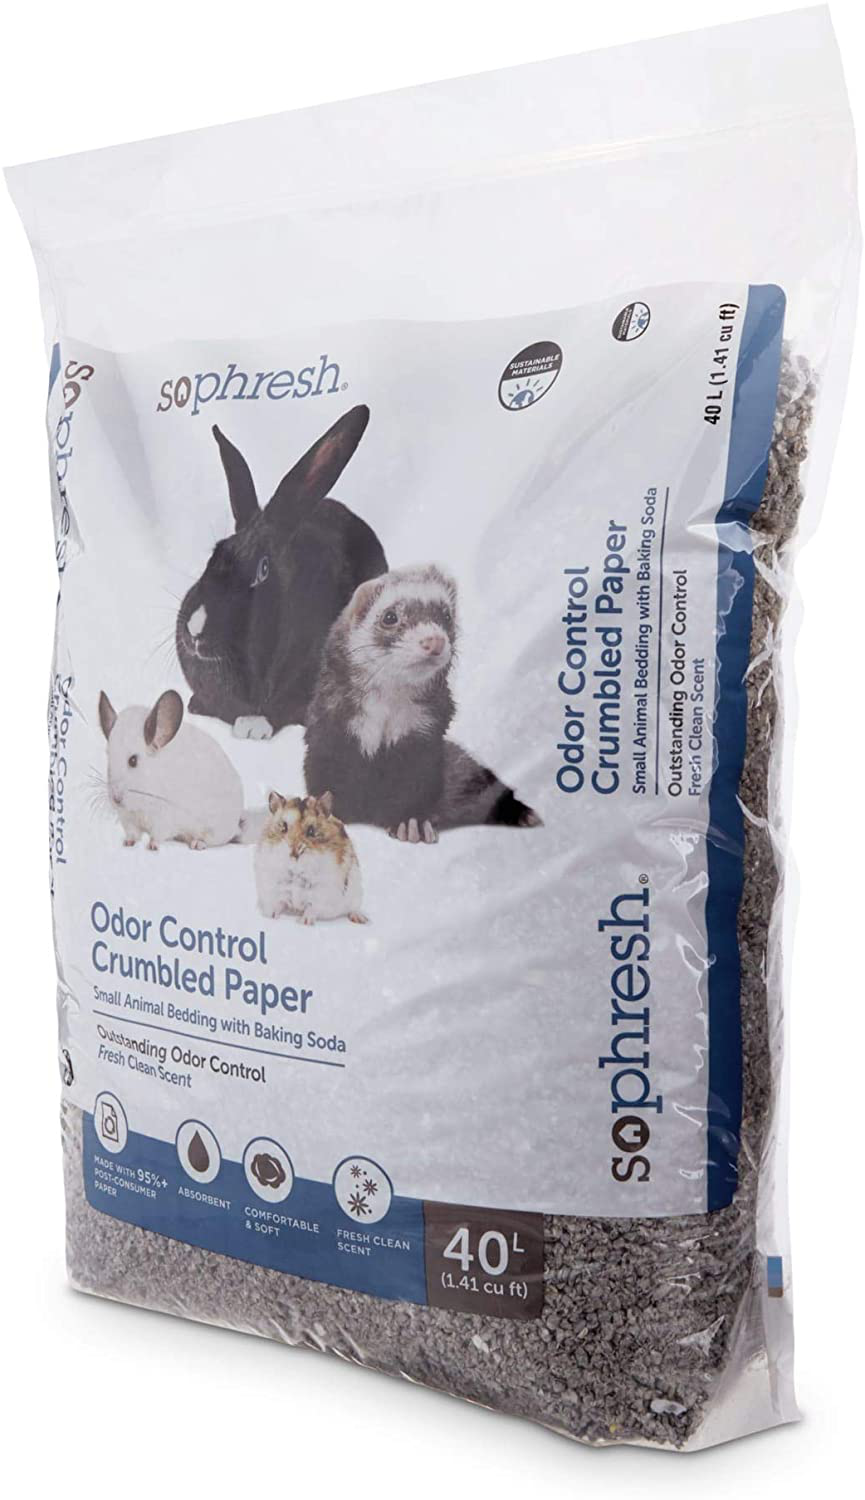 Petco Brand - so Phresh Odor-Control Crumbled Paper Small Animal Bedding, 40 Liters